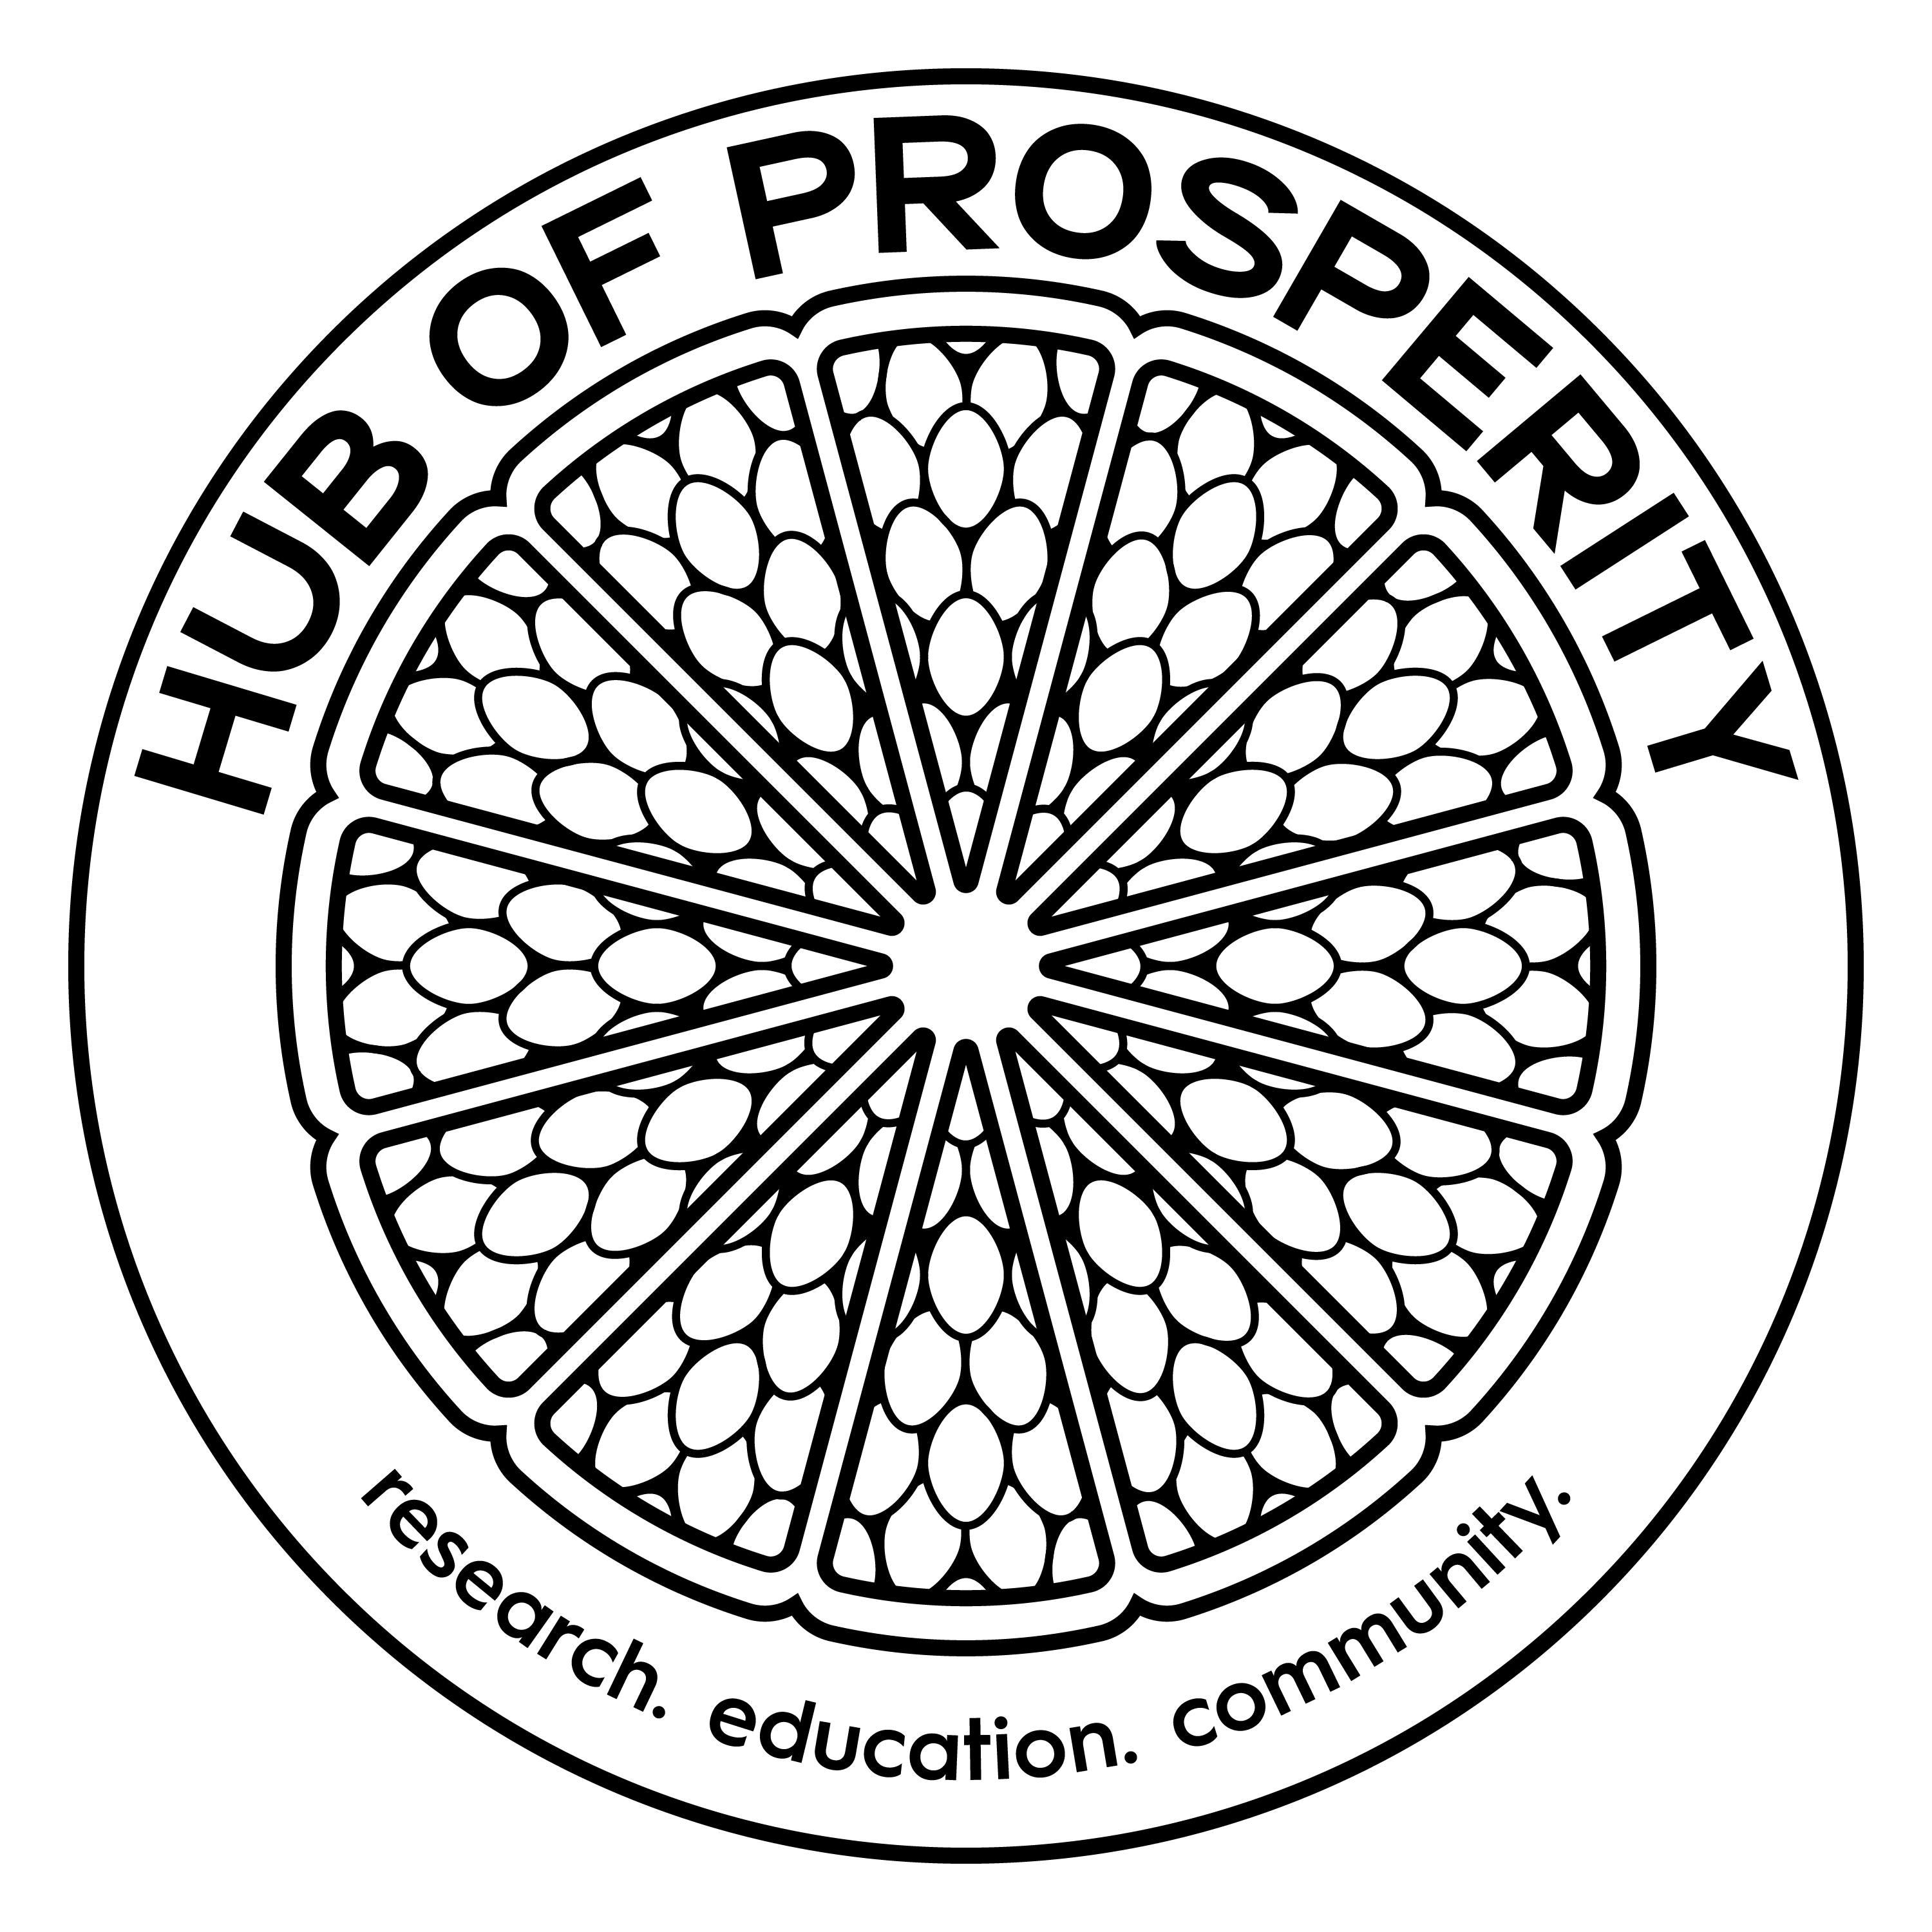 Hub of Prosperity